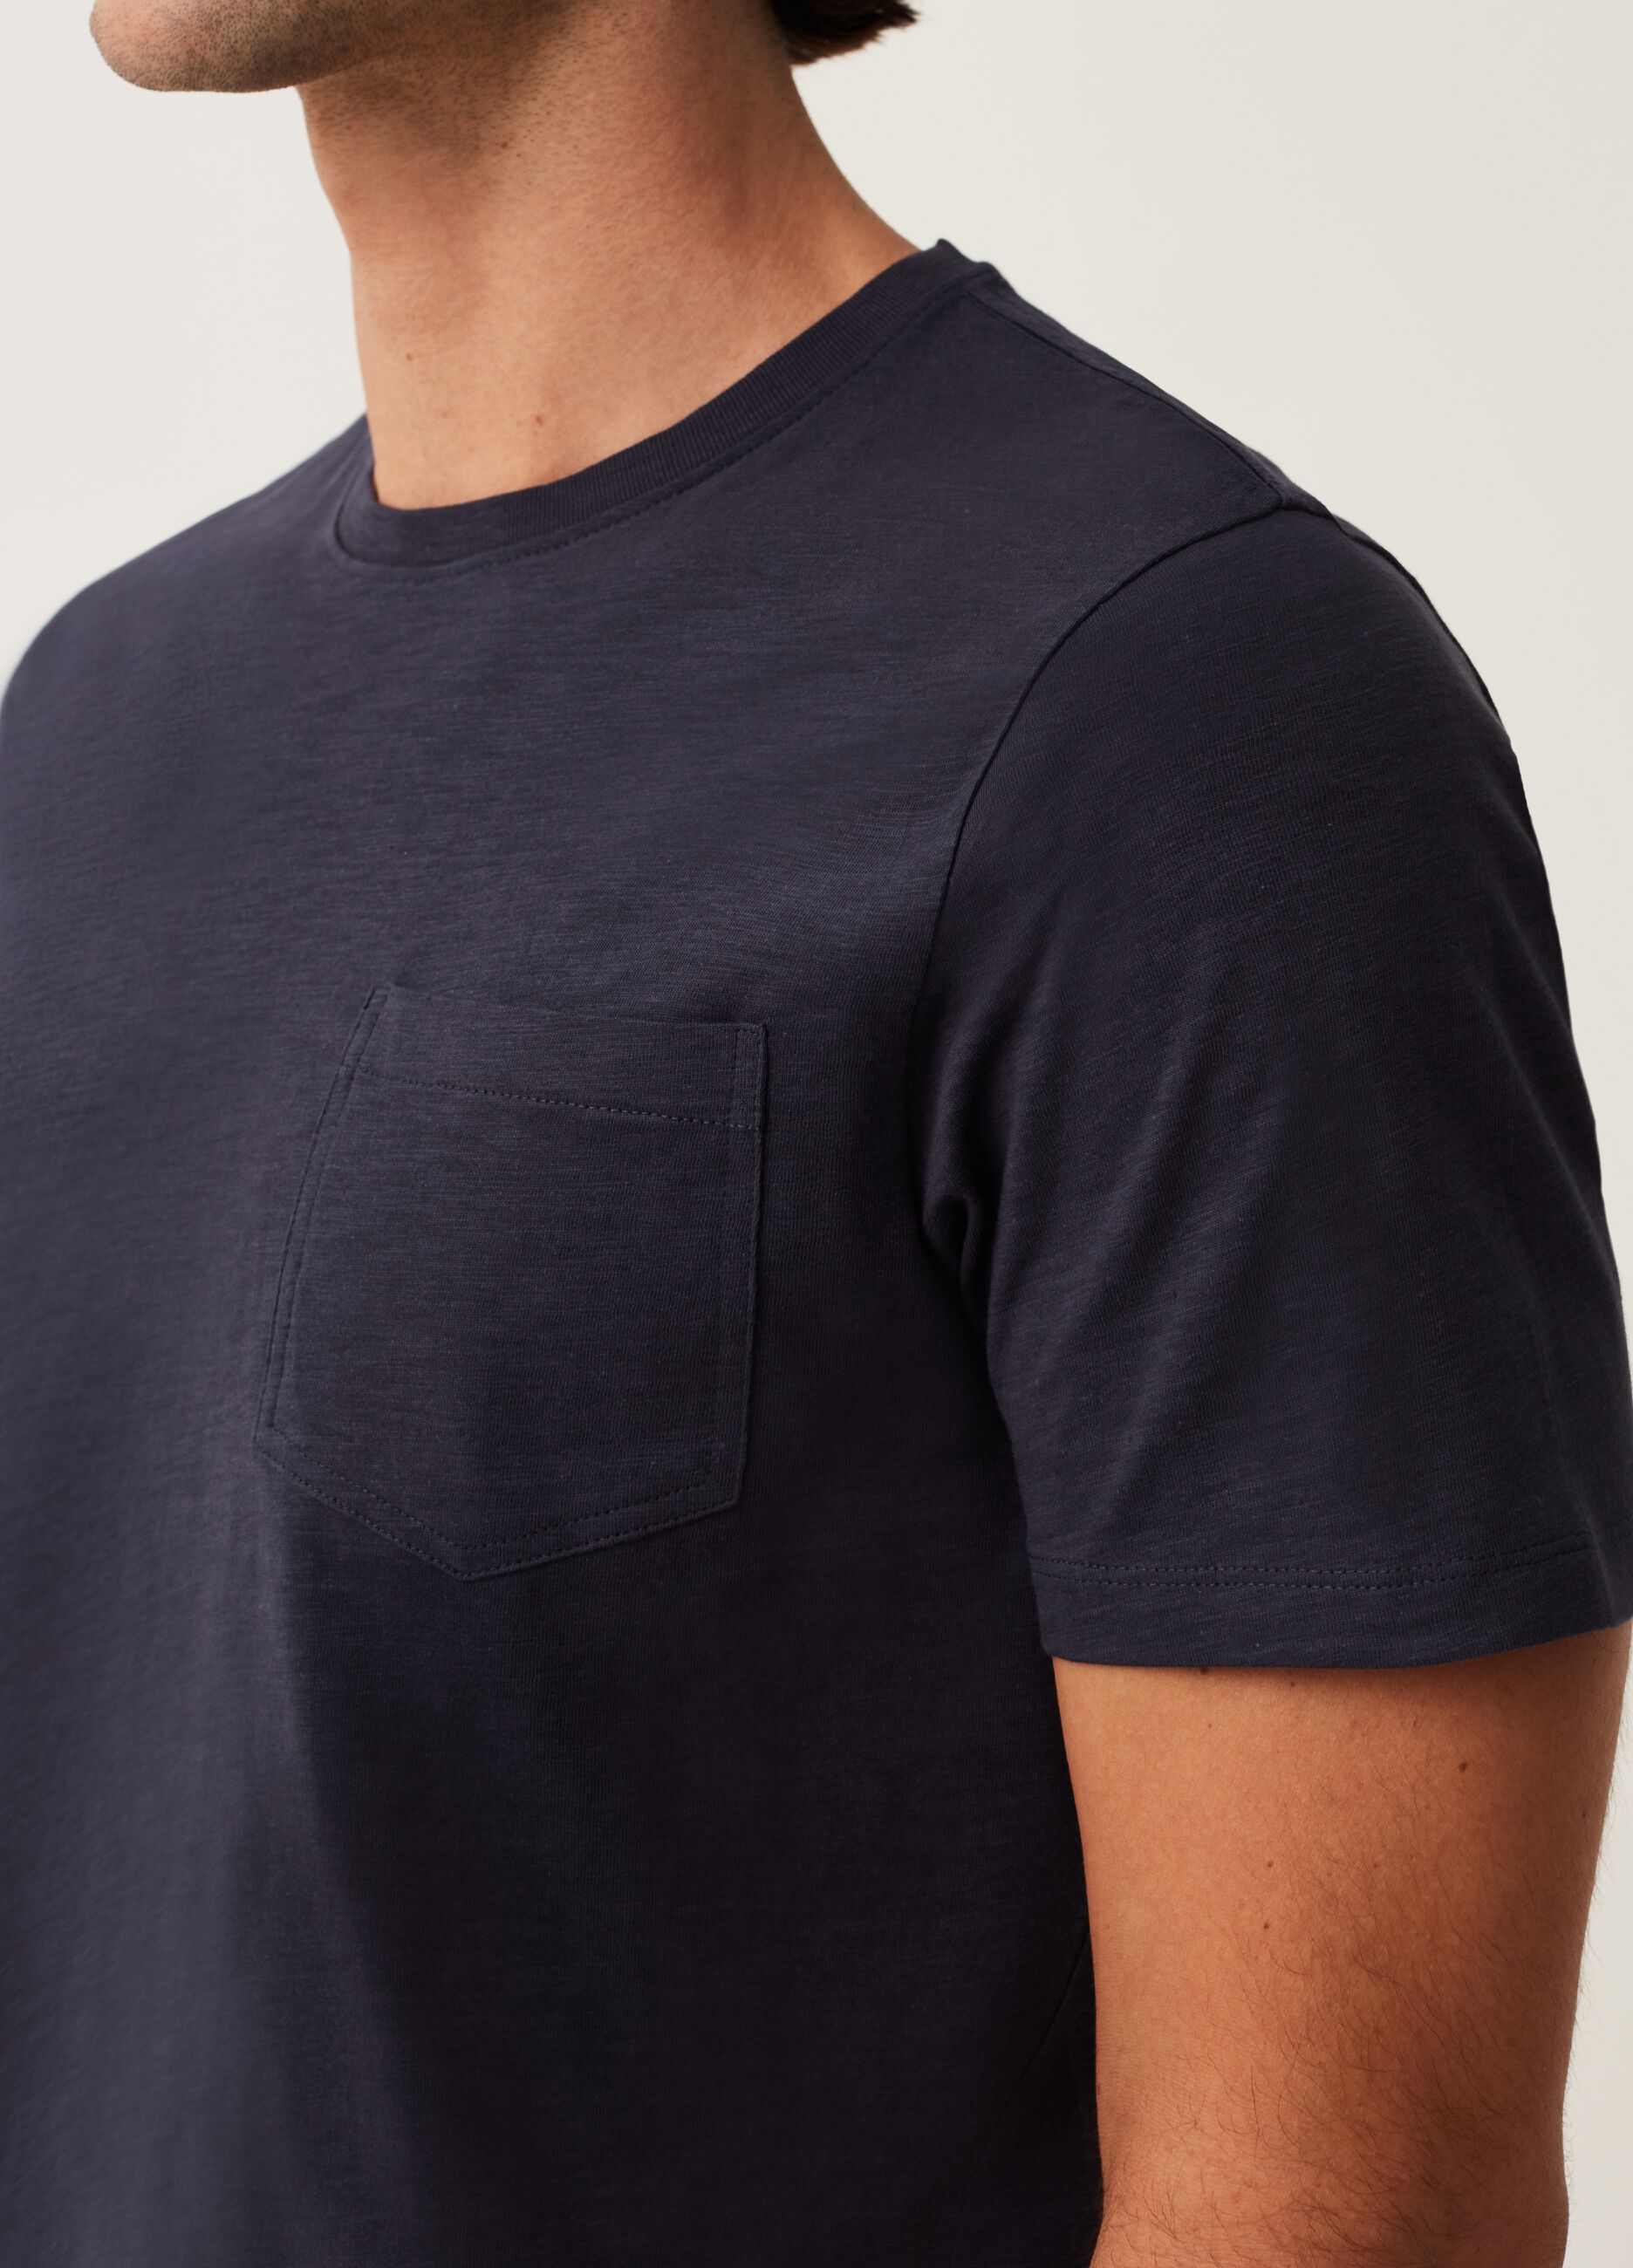 Jersey slub T-shirt with pocket